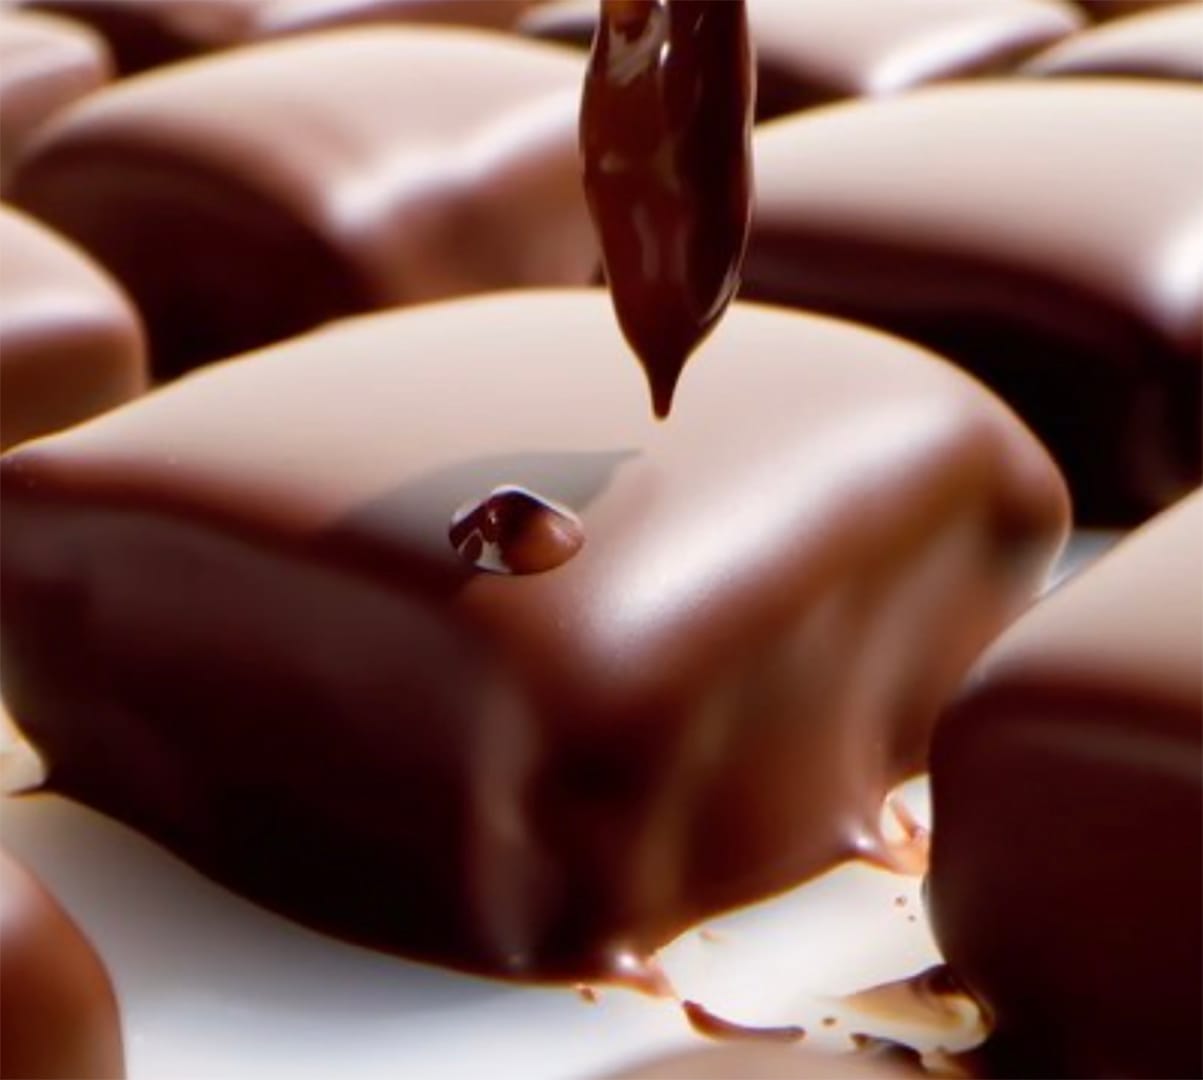 Sweet Vegan Chocolates Interview & Tasting | #PodSaveChocolate